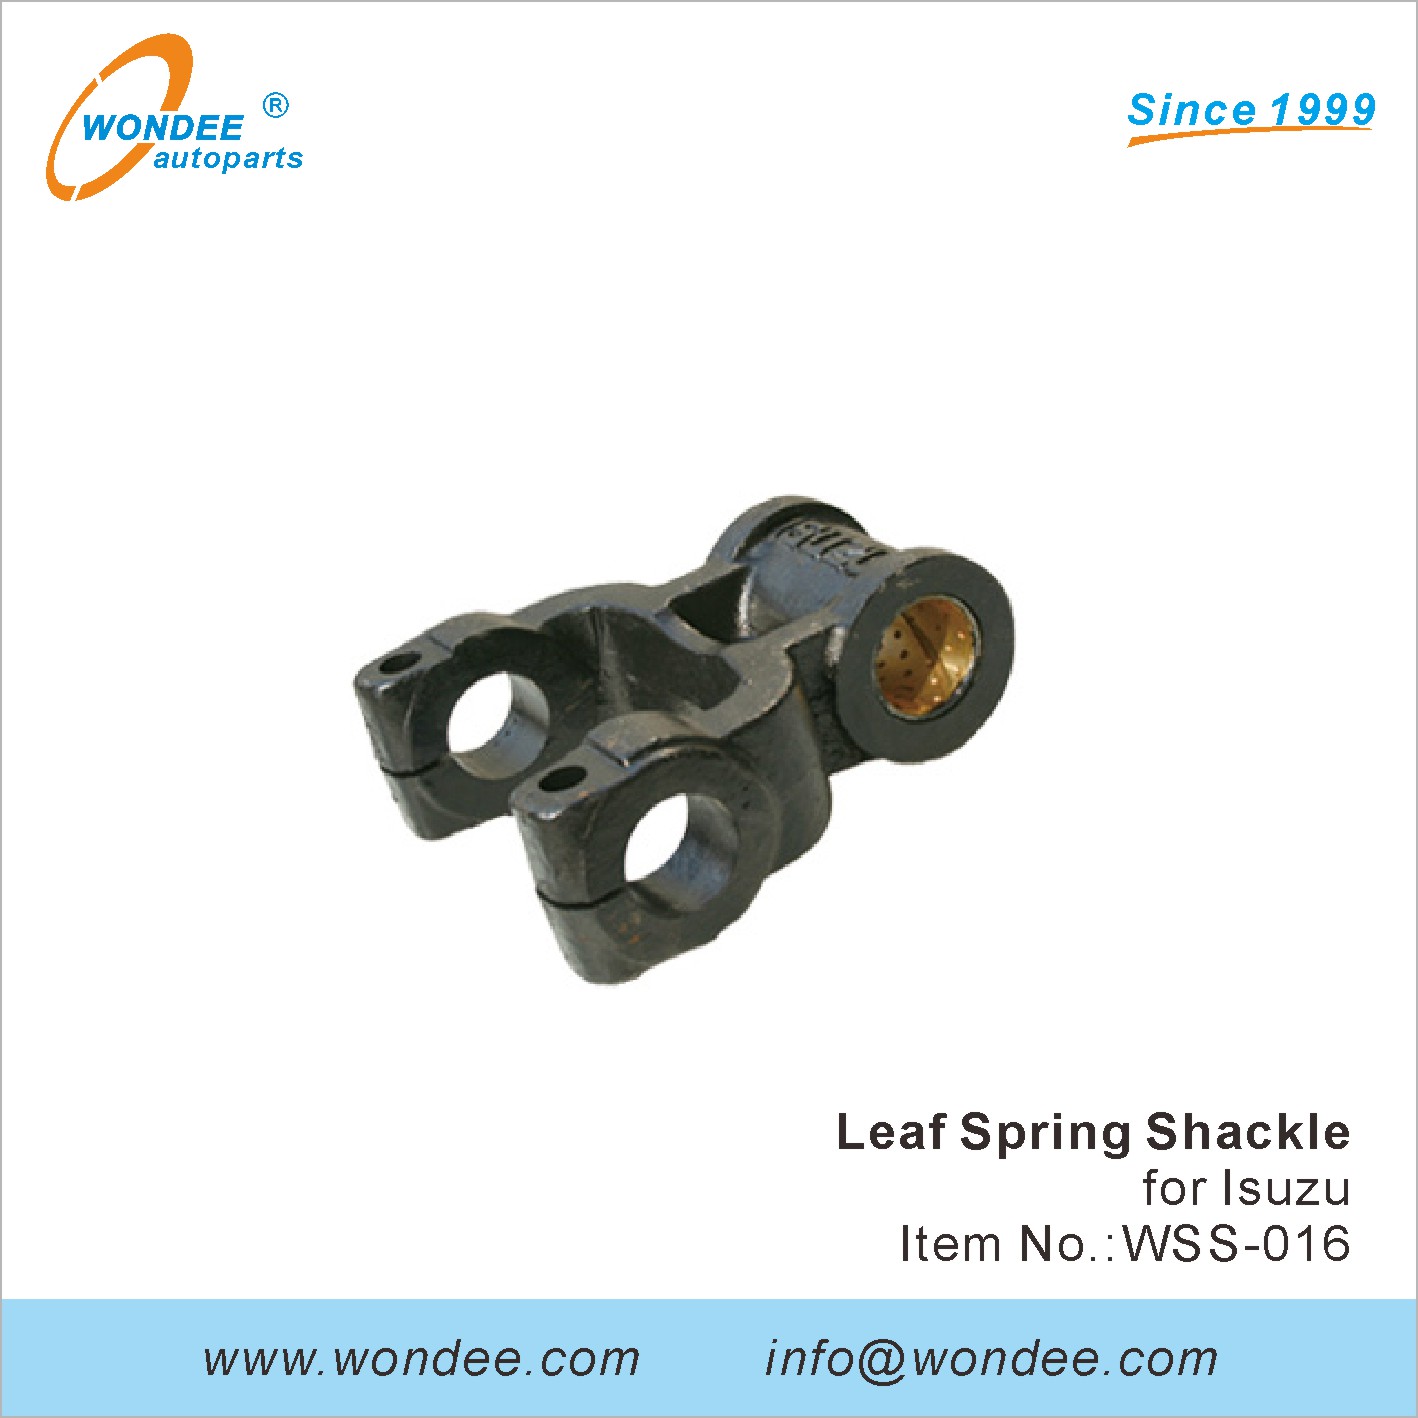 WONDEE leaf spring shackle (16)